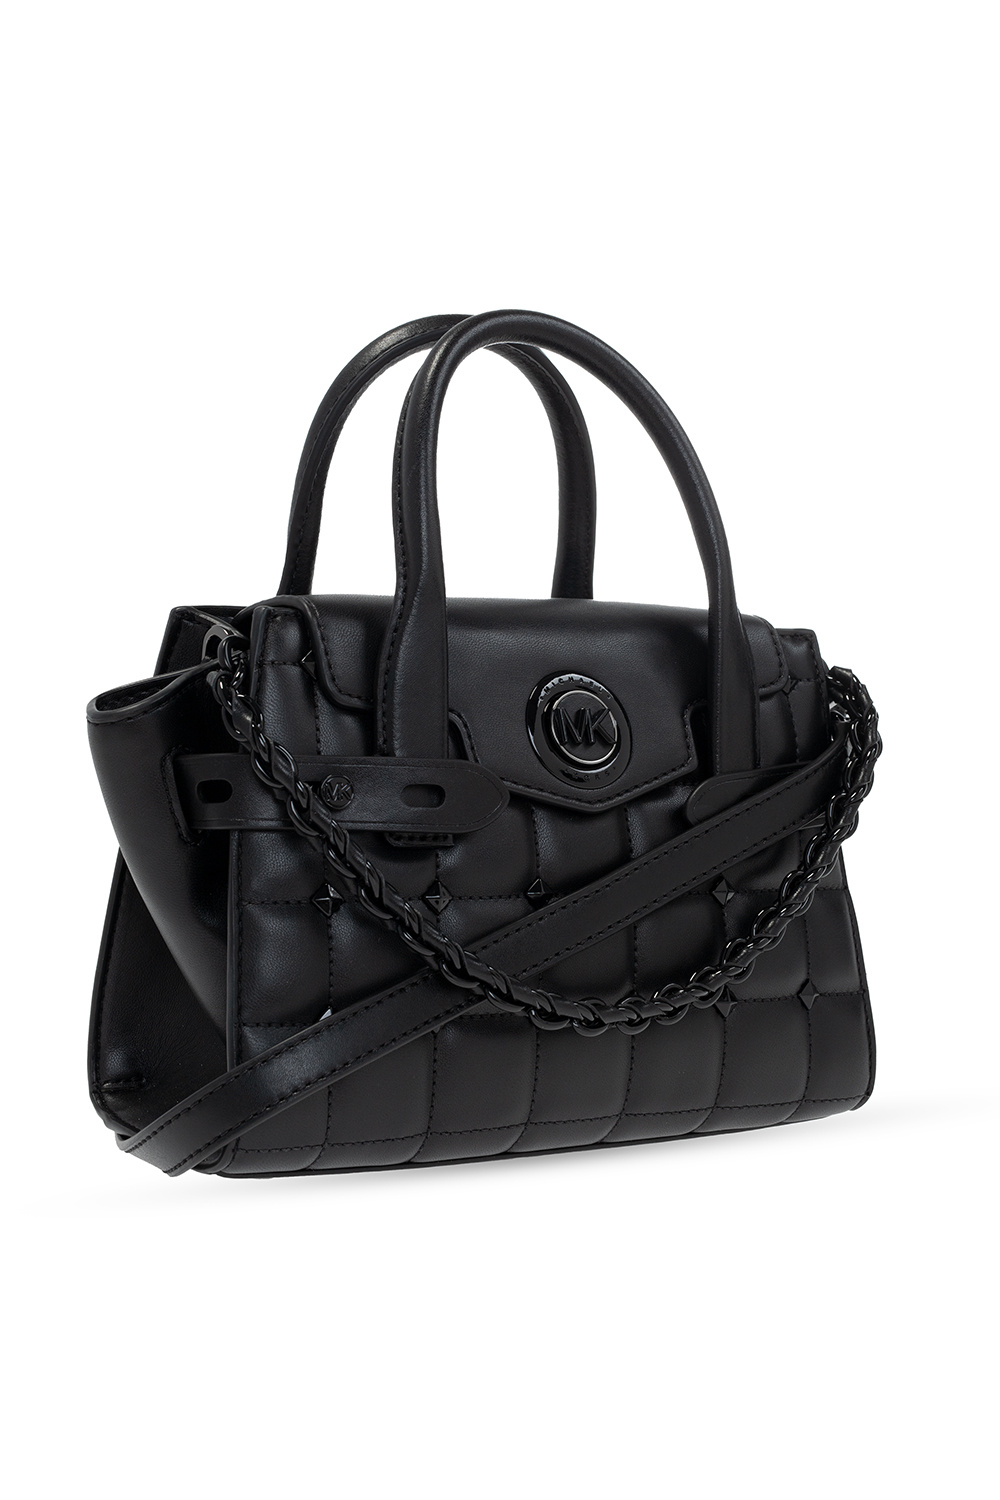 Michael Kors Carmen Medium Convertible Shoulder Bag in Black (35S2GNML2L) -  USA Loveshoppe